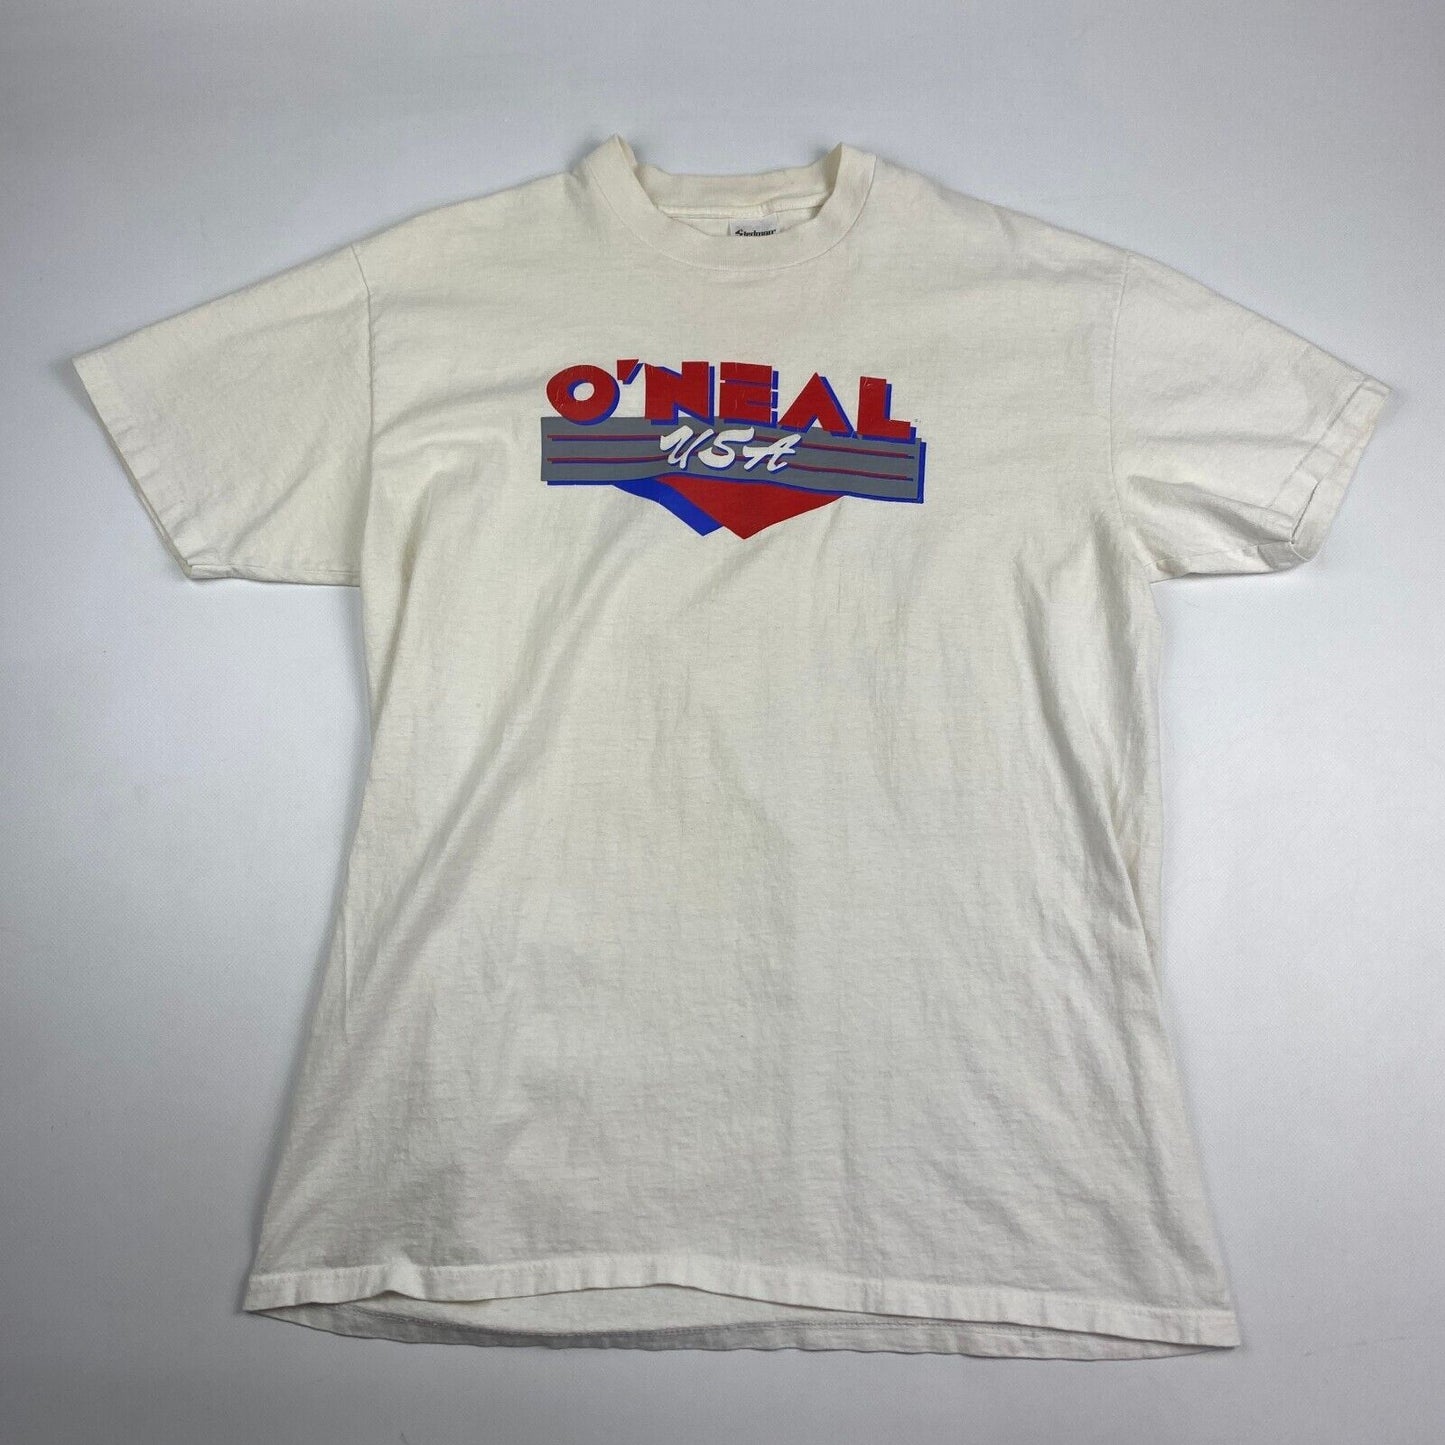 VINTAGE 90s O'Neal Action Wear White T-Shirt sz Large Men